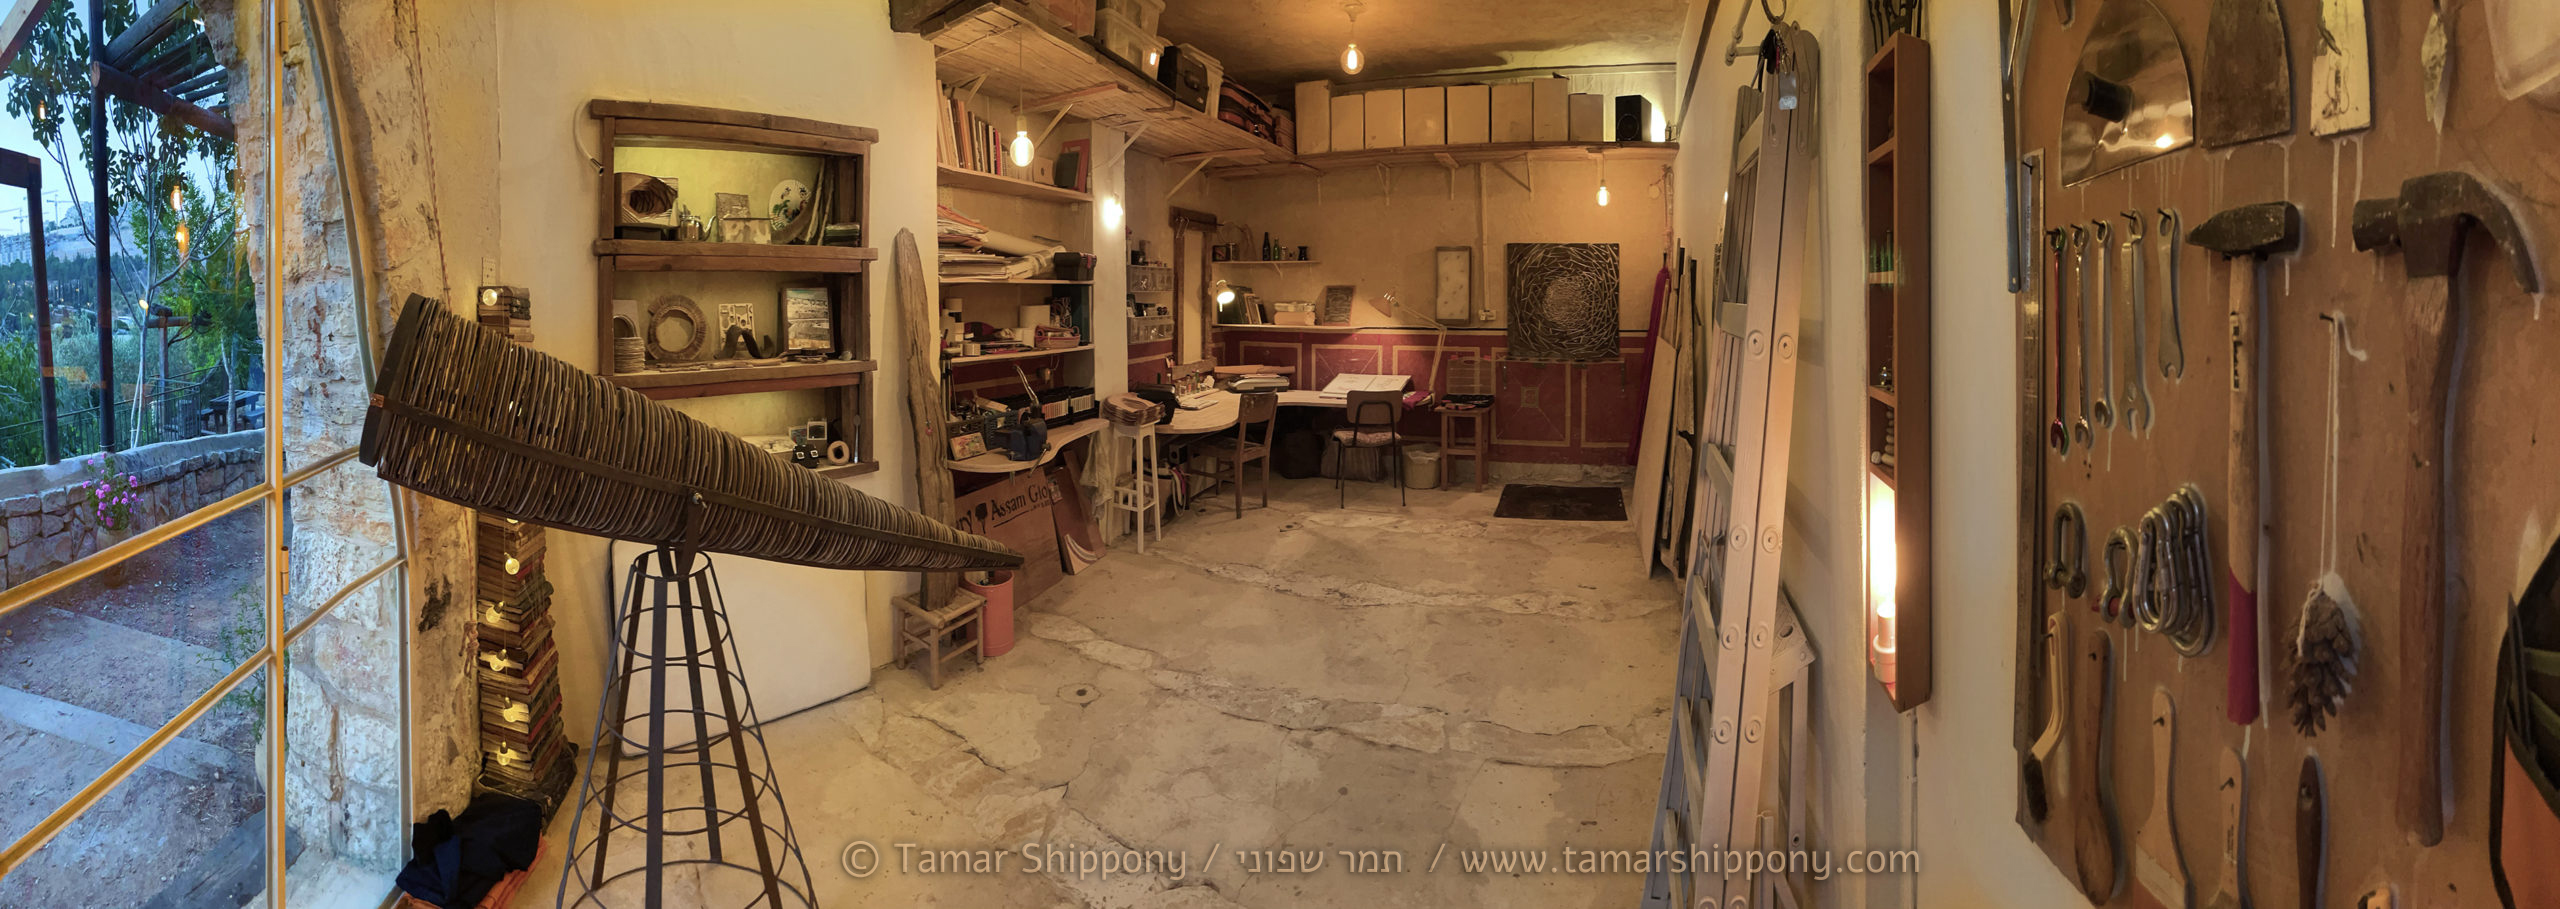 The studio of artist Tamar Shippony | הסטודיו של אמנית תמר שפוני